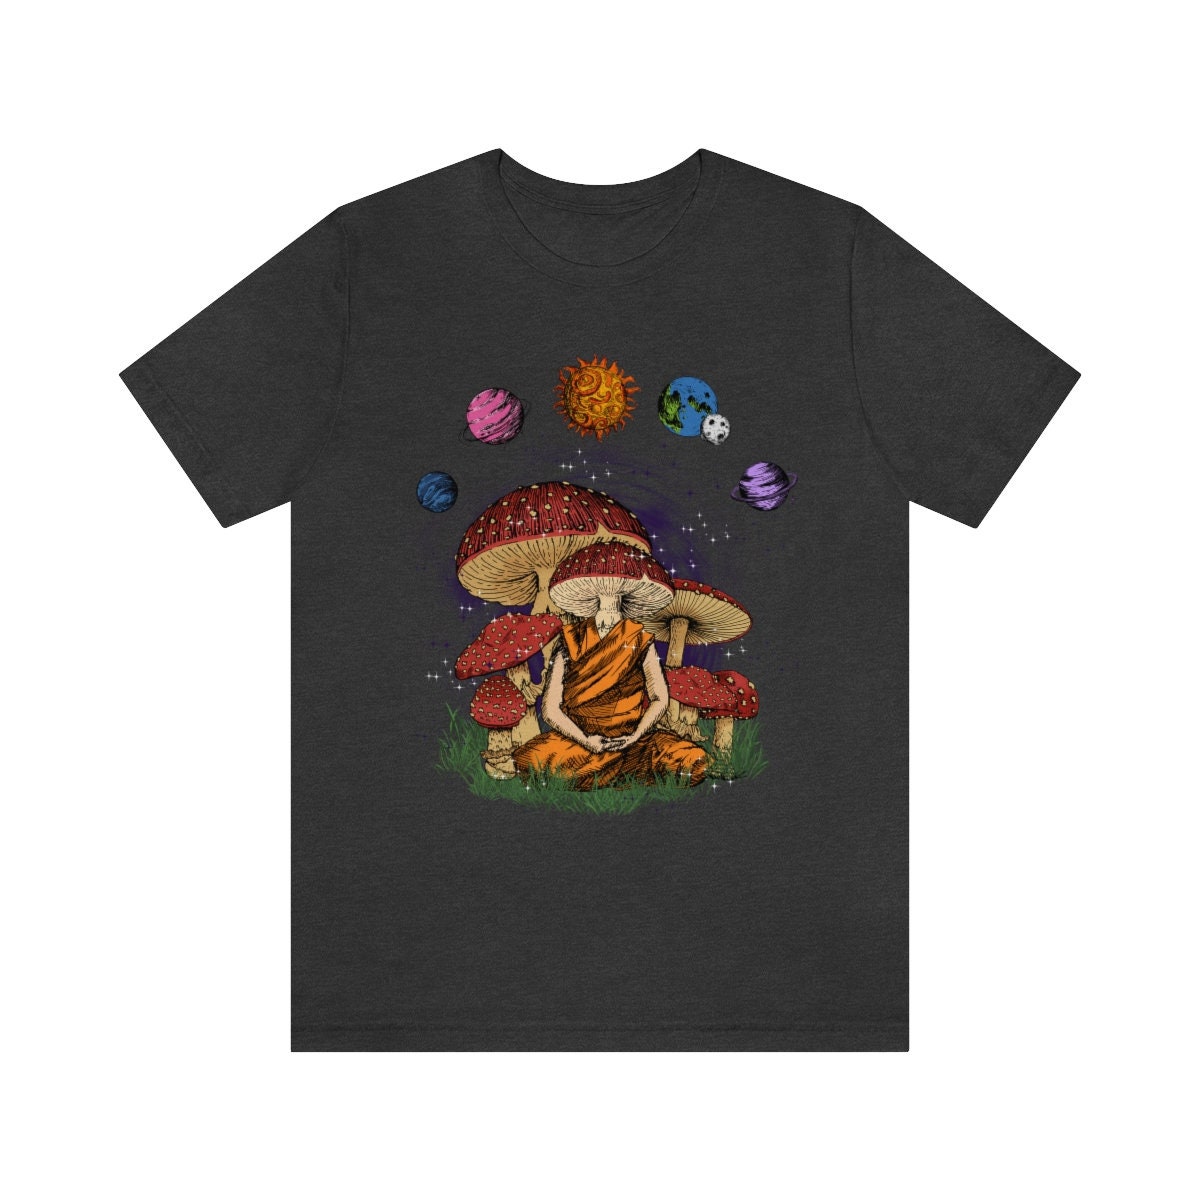 Discover Meditating Mushroom Graphic T-Shirt